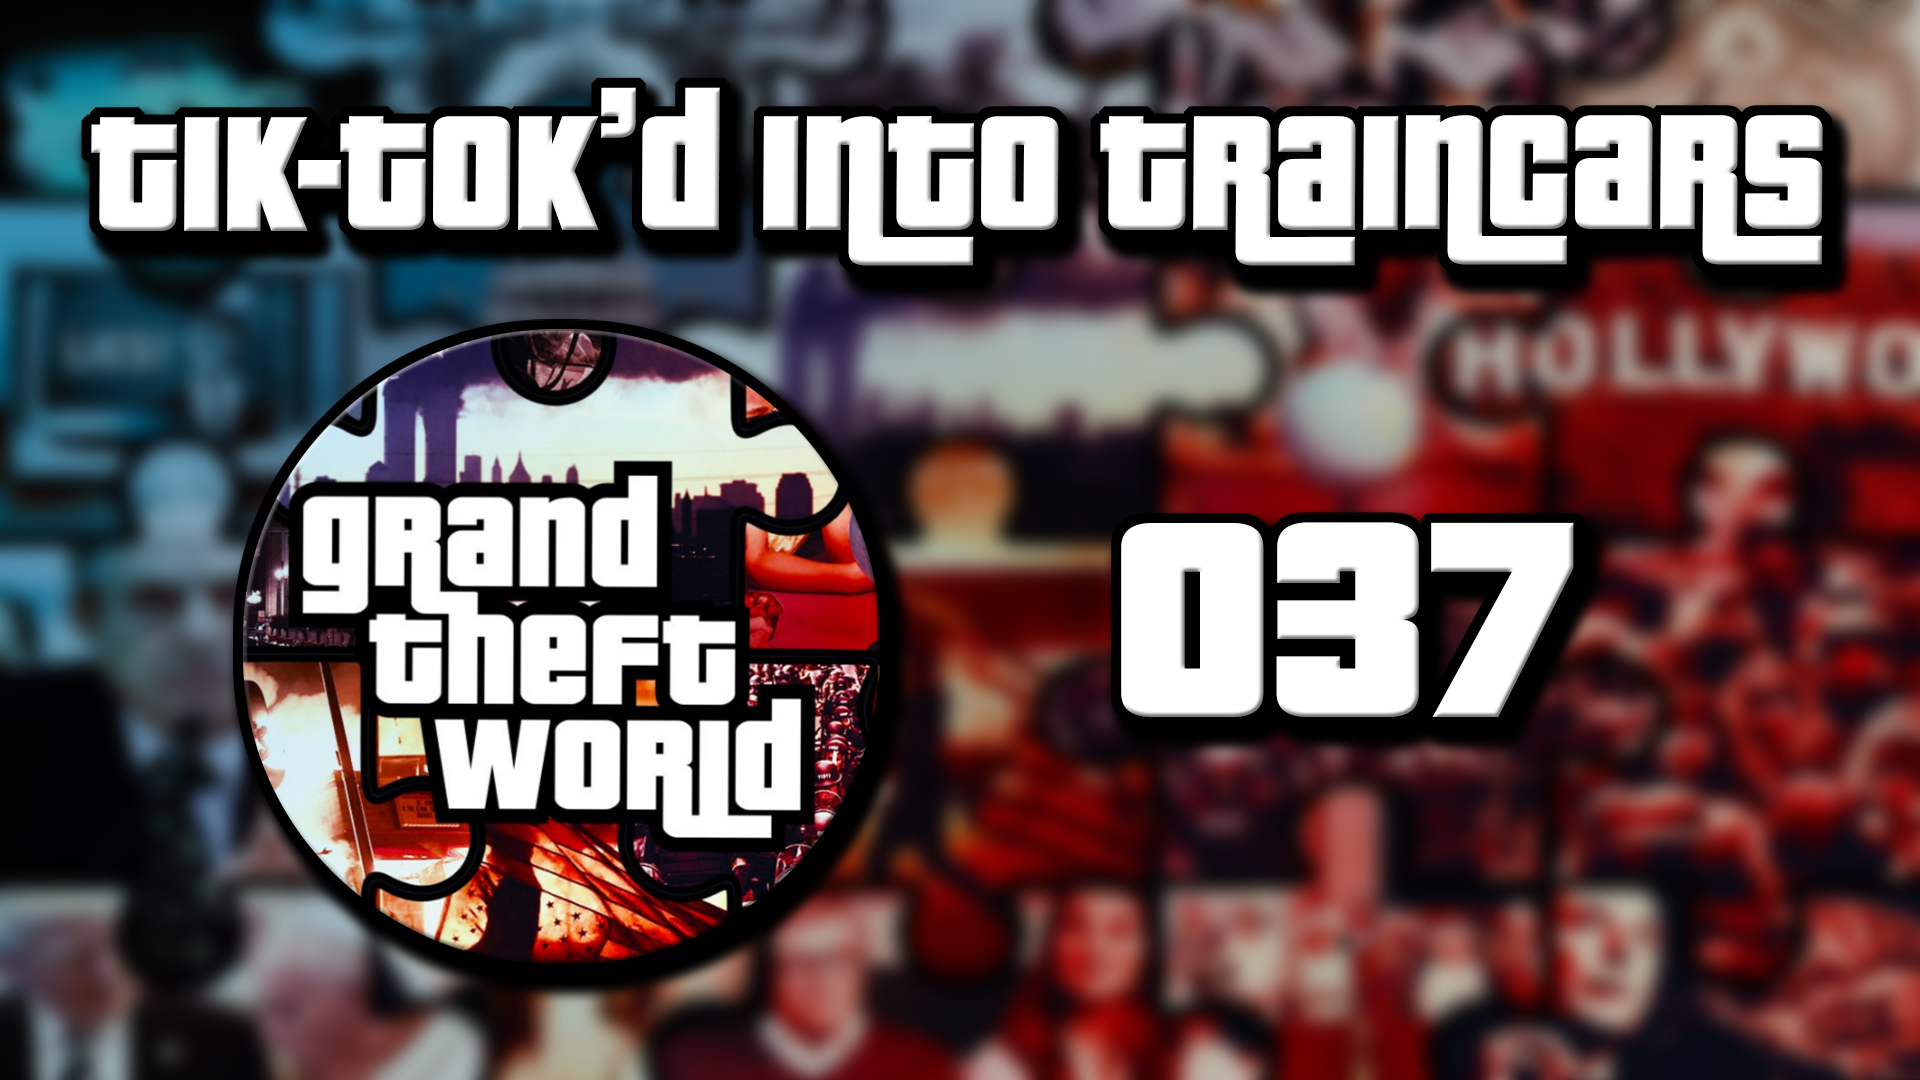 Grand Theft World Podcast 037 | Tik Tok’d Into Traincars